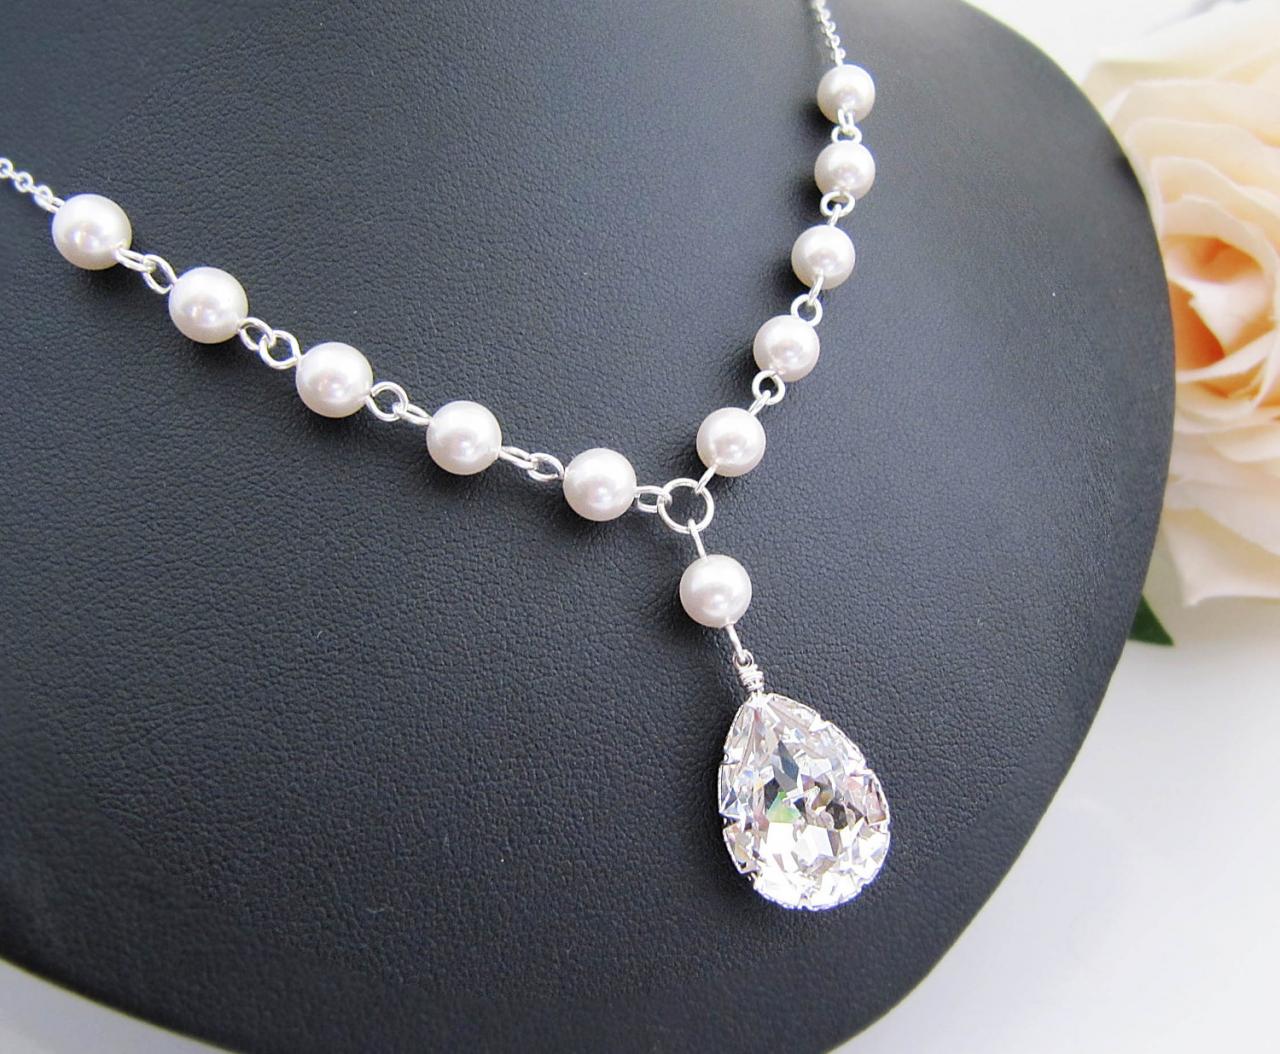 Wedding Bridal Jewelry Bridal Necklace - Crystal White Swarovski Pearls And Clear Swarovski Crystal Drop